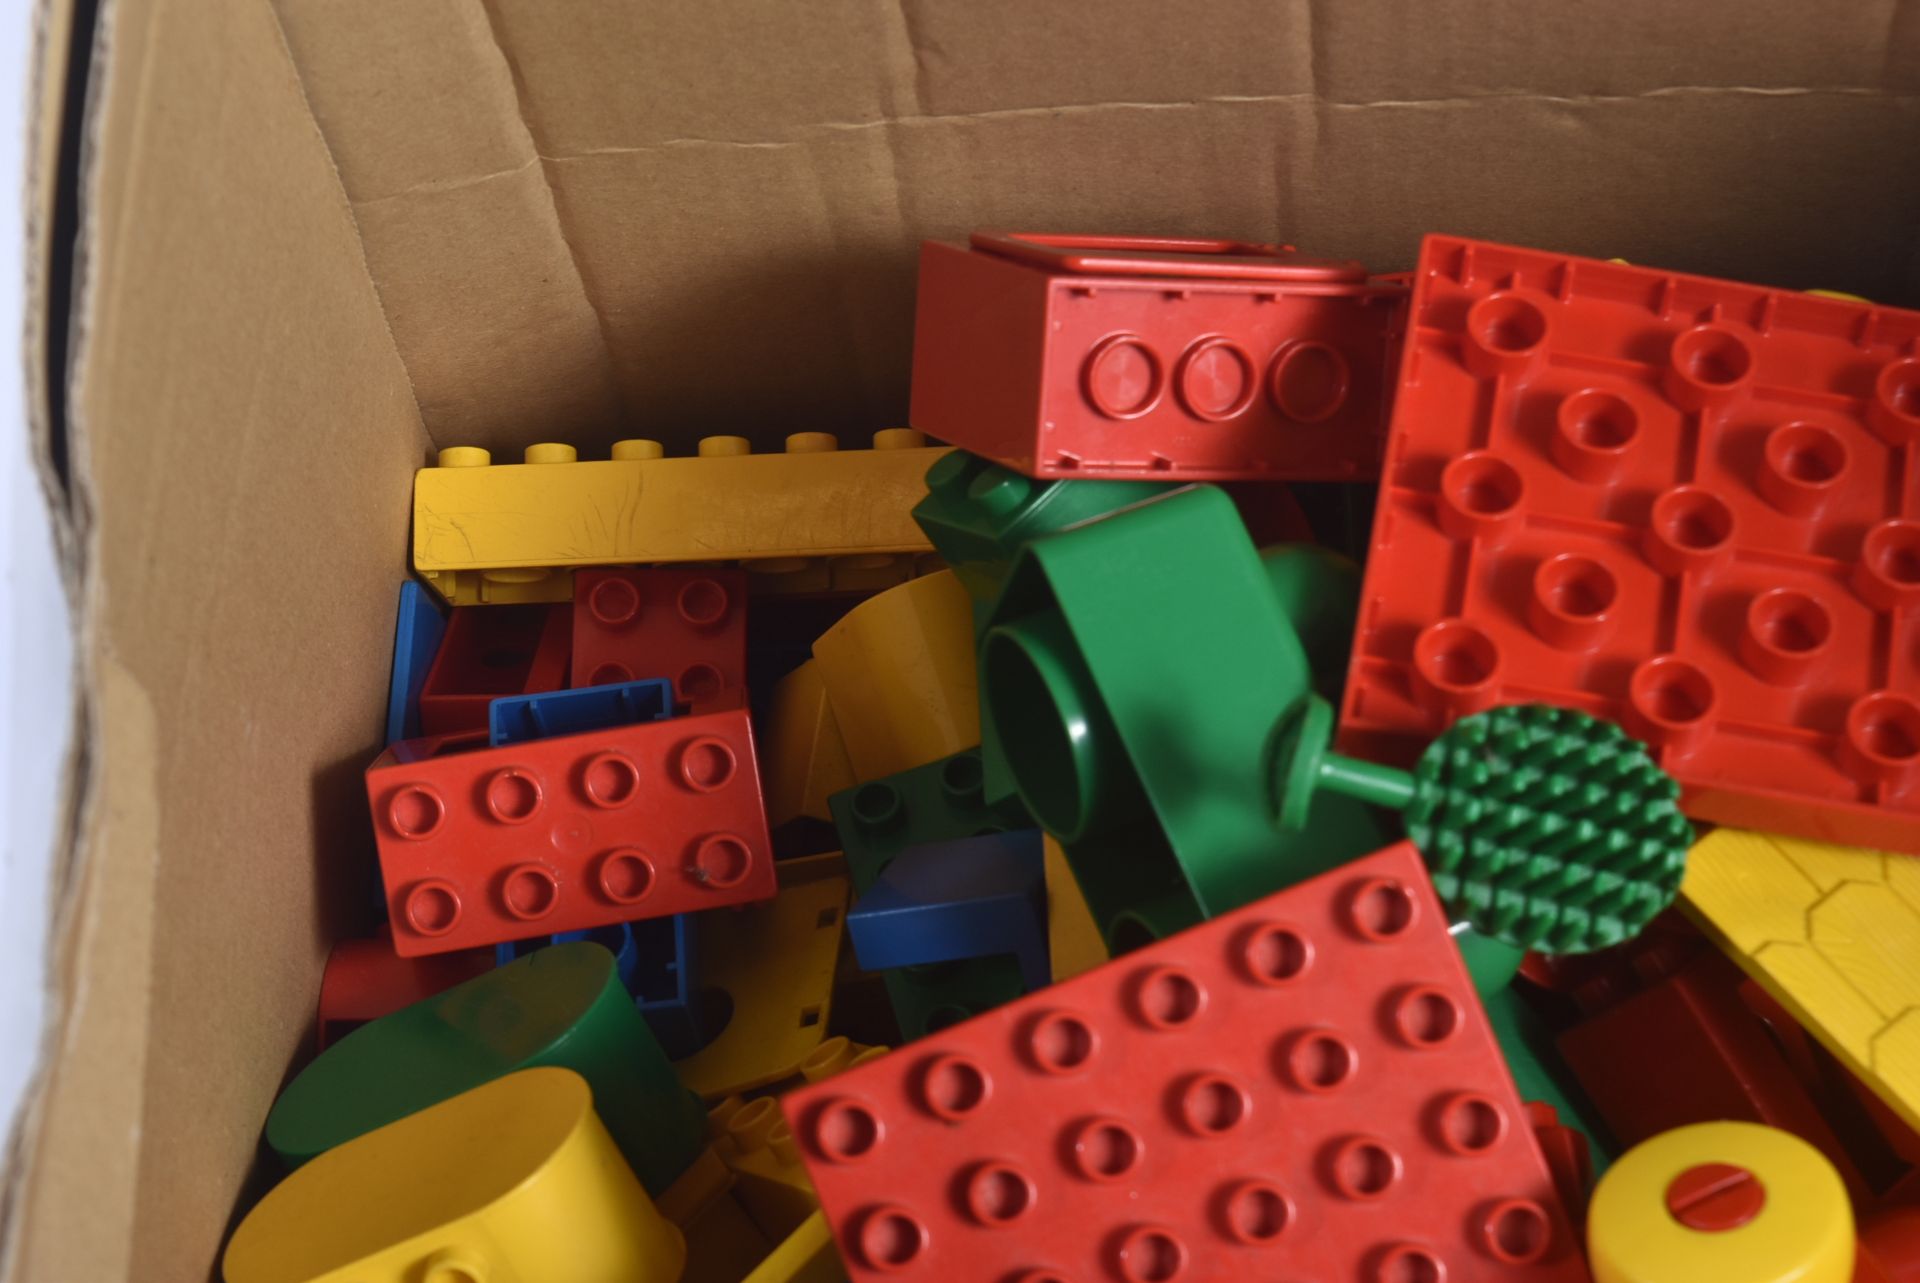 COLLECTION OF VINTAGE LEGO DUPLO BUILDING BRICKS - Image 6 of 7